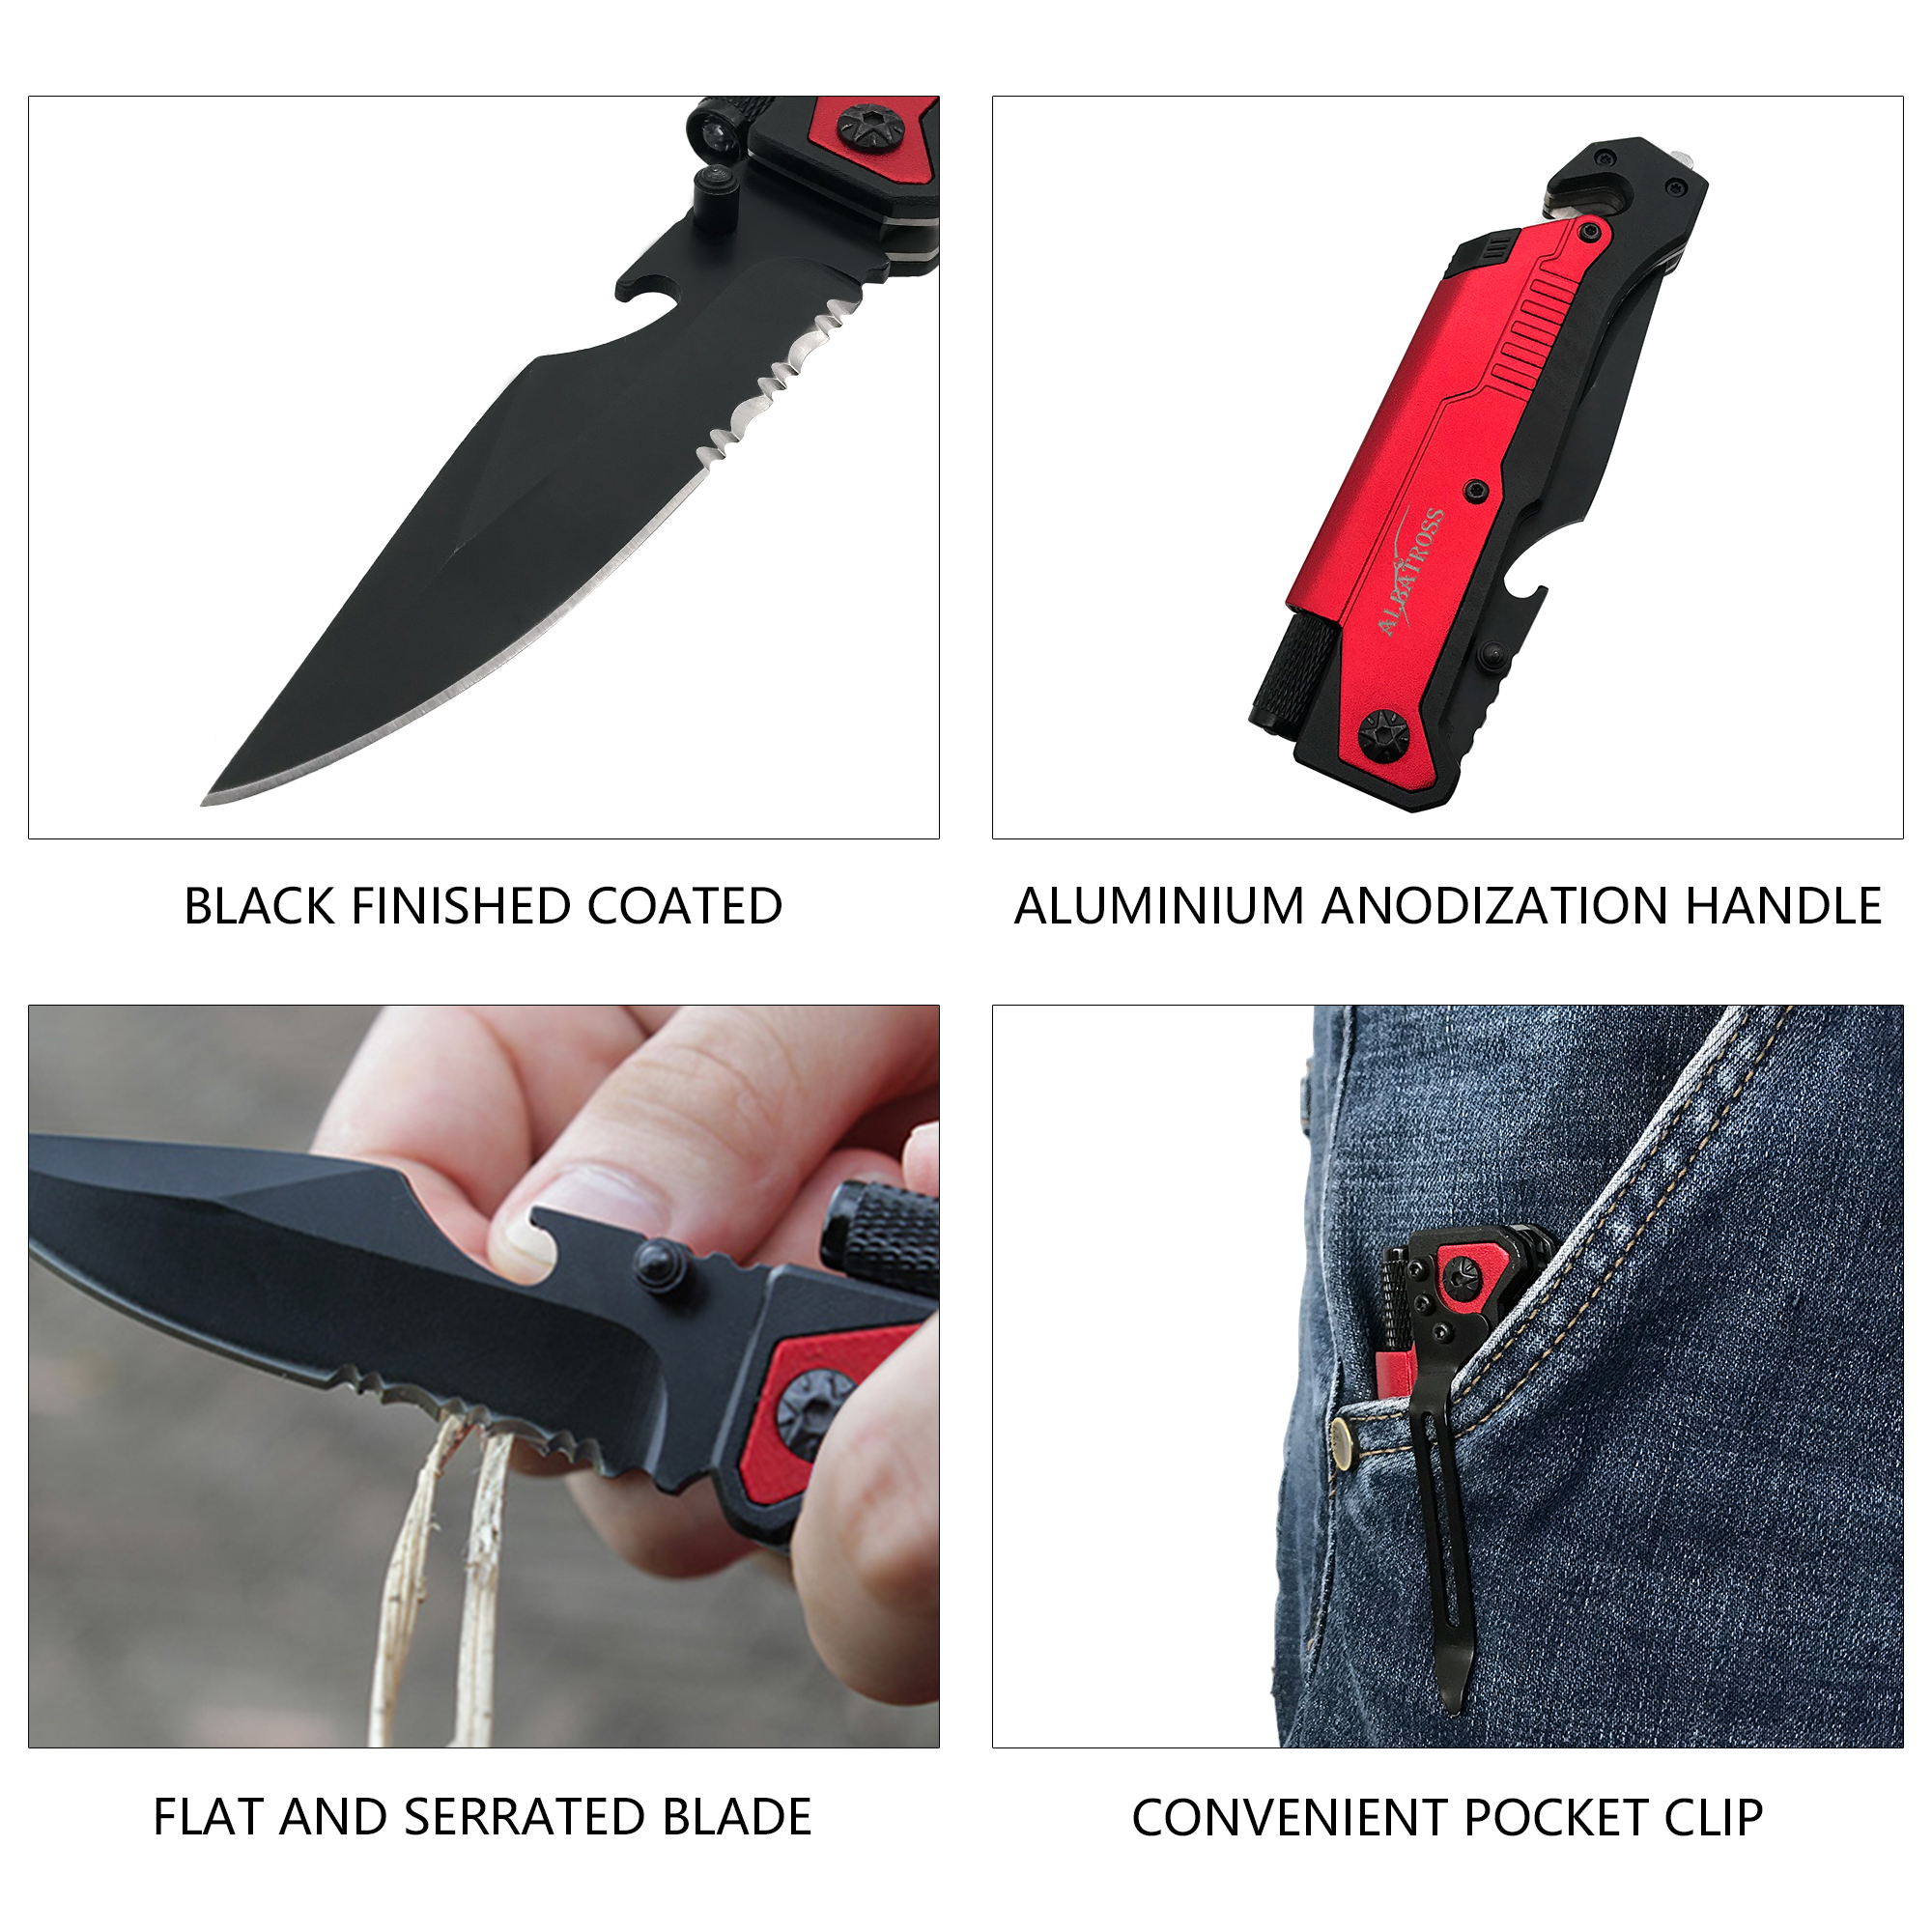  ALBATROSS EDC Cool Sharp Tactical Folding Pocket  Knife,SpeedSafe Spring Assisted Opening Knifes with Liner  Lock,Pocketclip,Glass Breaker,Seatbelt Cutter(Pink) : Tools & Home  Improvement